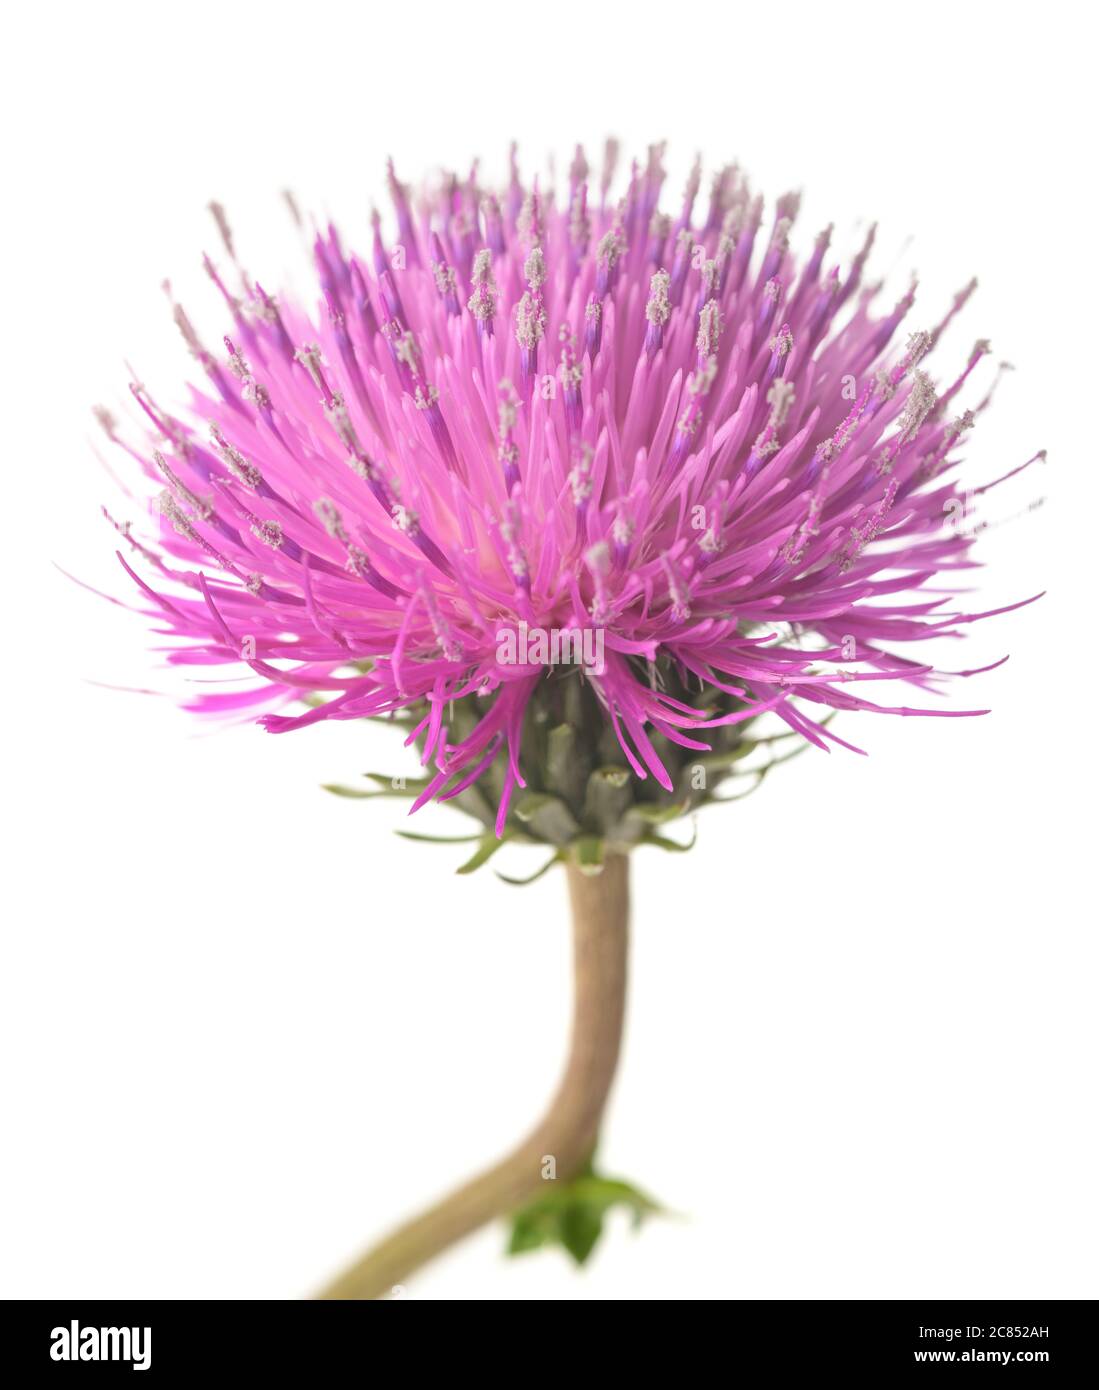 Thistle flower isolated on white background Stock Photo